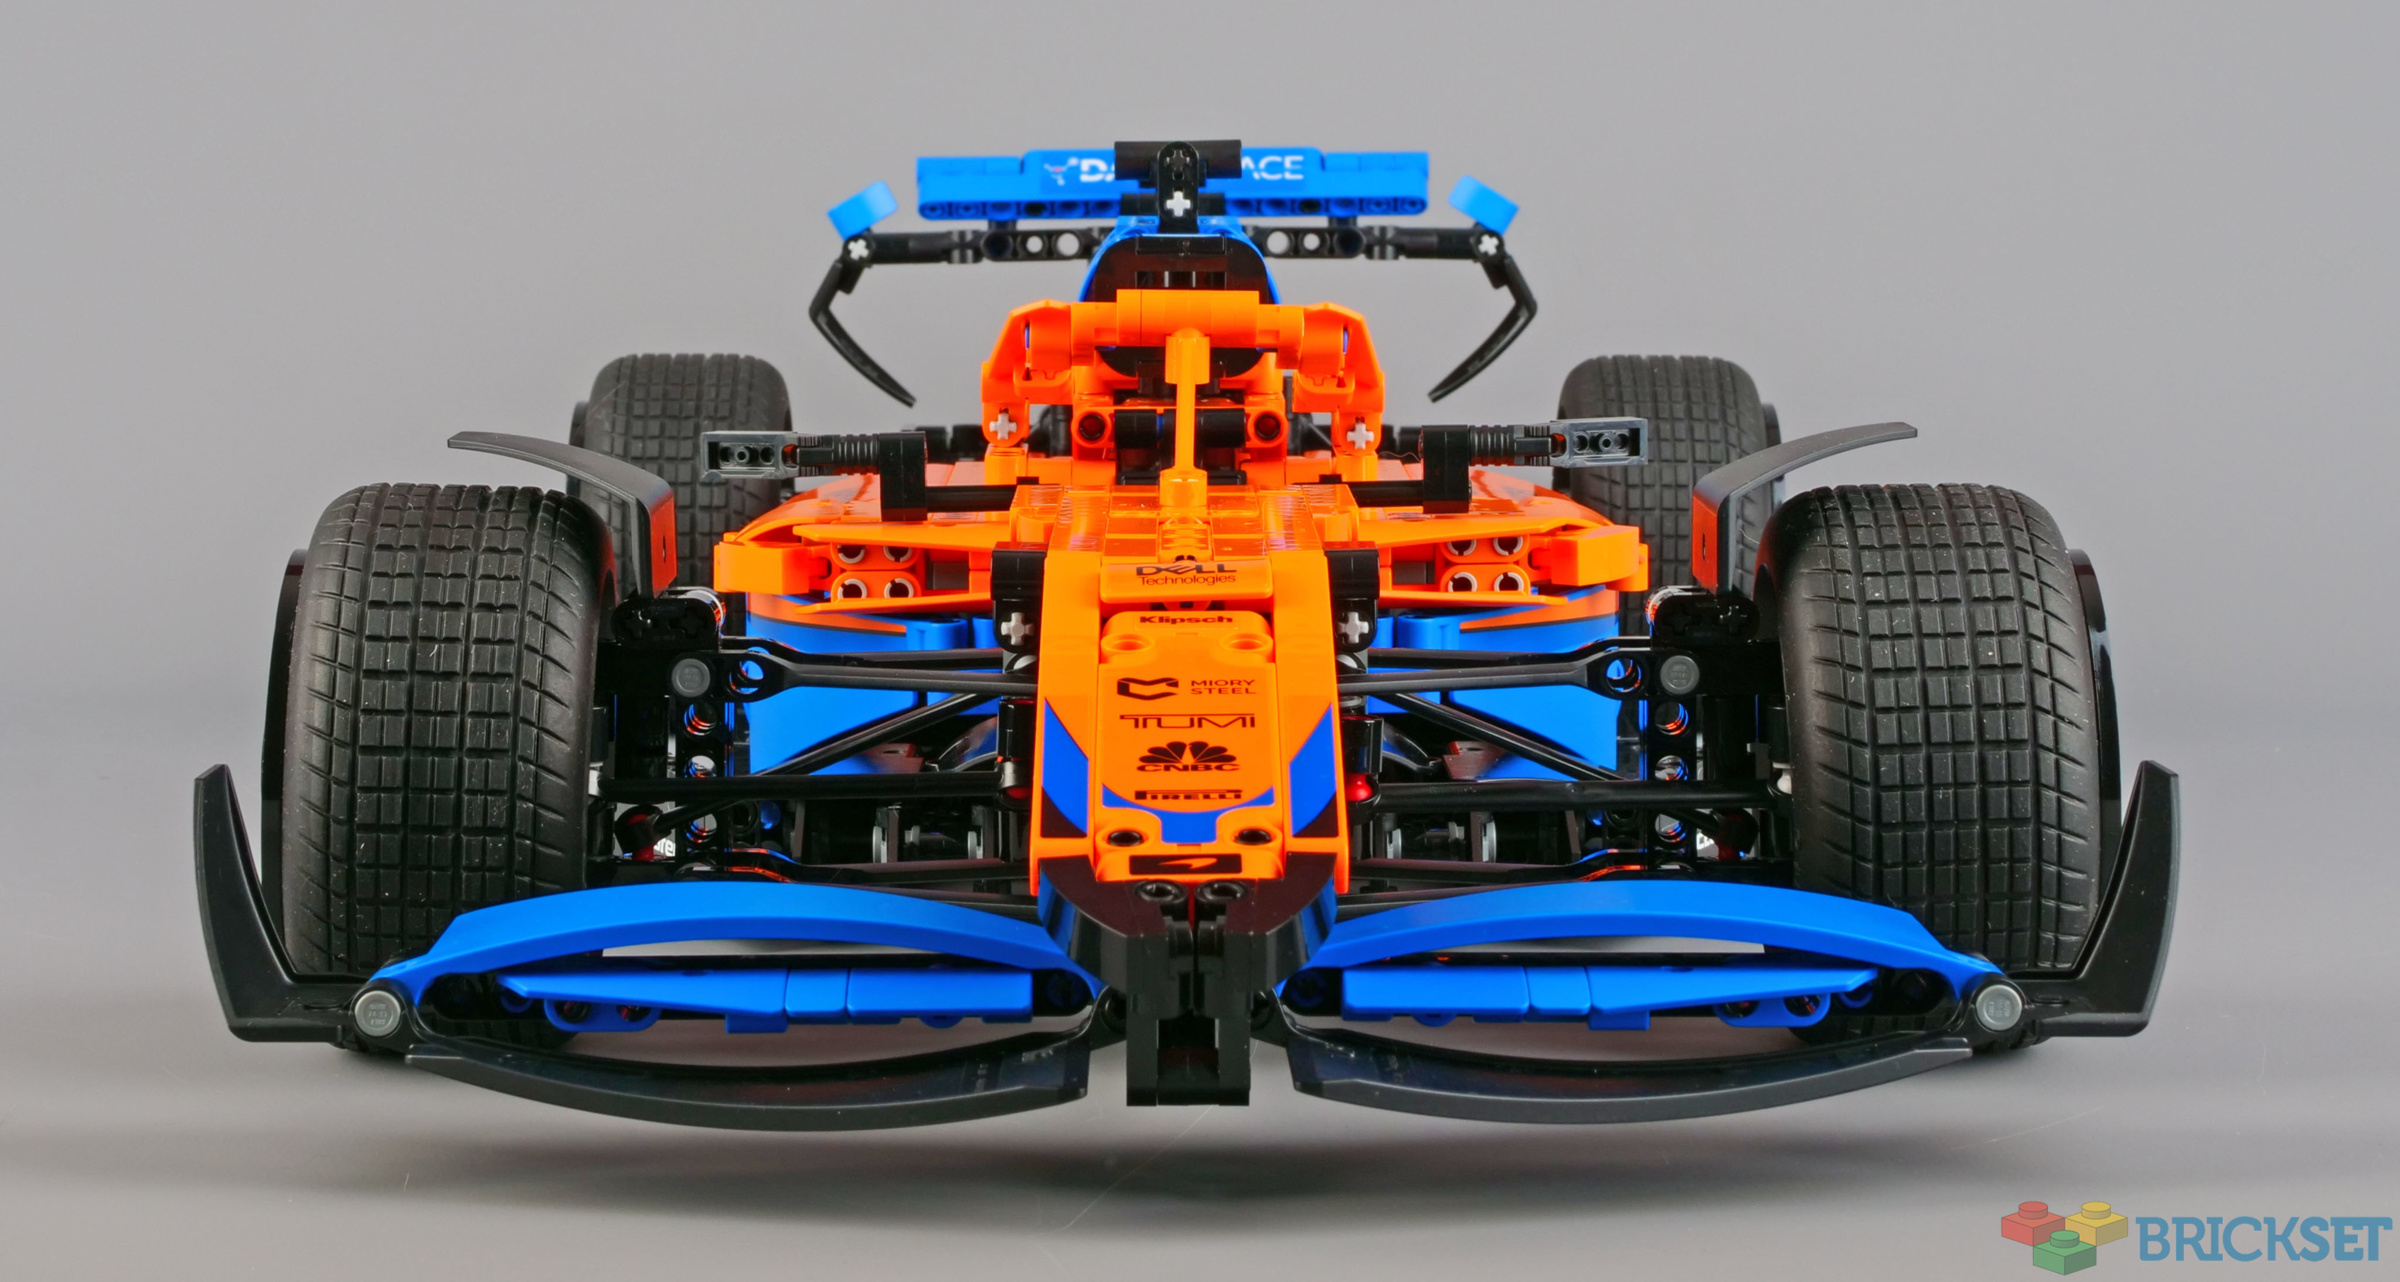 ▻ Review : LEGO Technic 42141 Mc Laren Formula 1 Race Car - HOTH